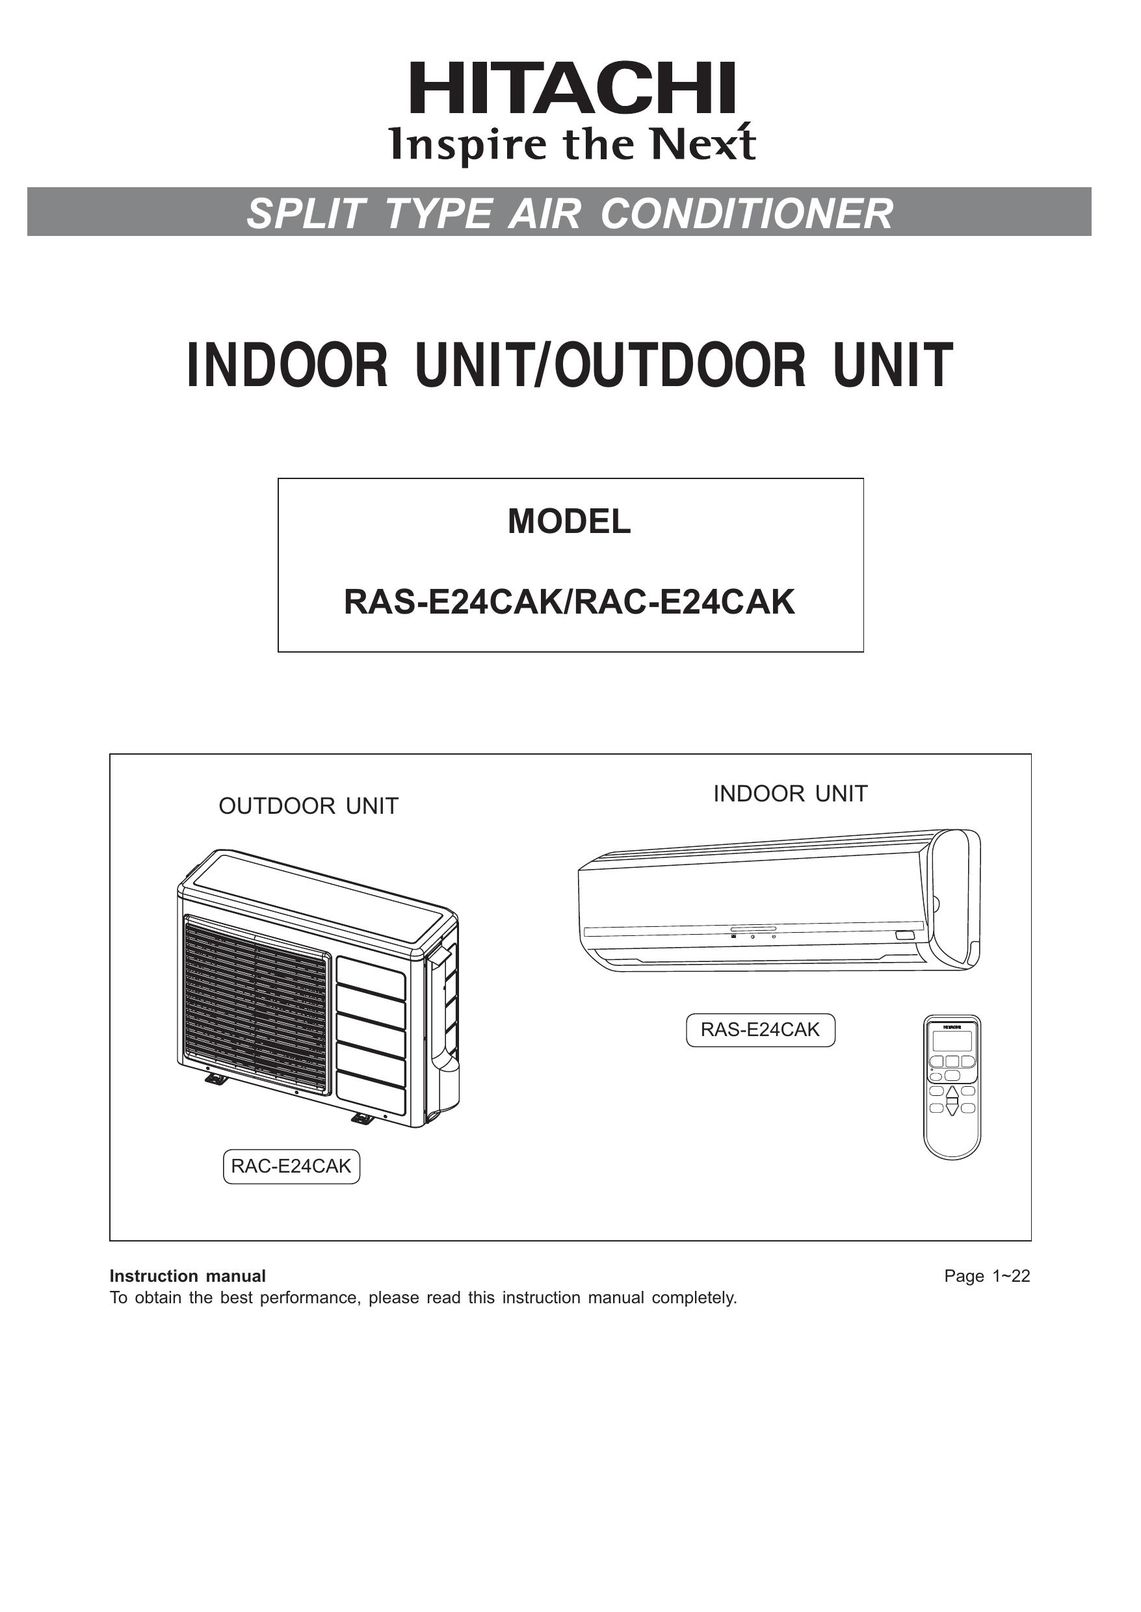 Hitachi rac-e24cak Air Conditioner User Manual